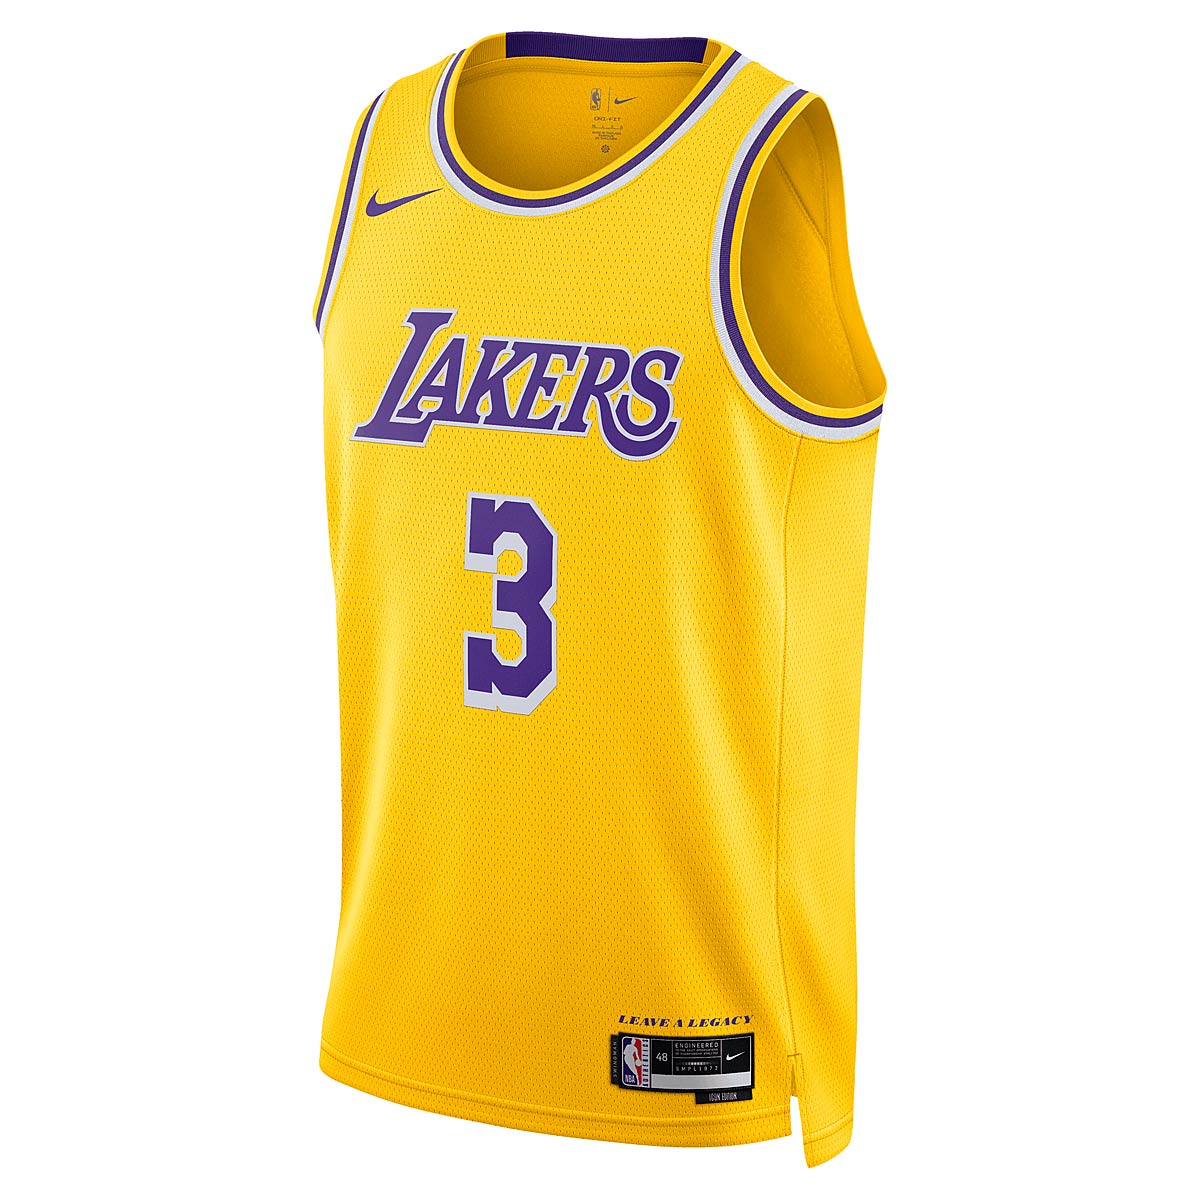 Compre NBA LOS ANGELES LAKERS ICON SWINGMAN JERSEY ANTHONY DAVIS por EUR 94.95 KICKZ.com!